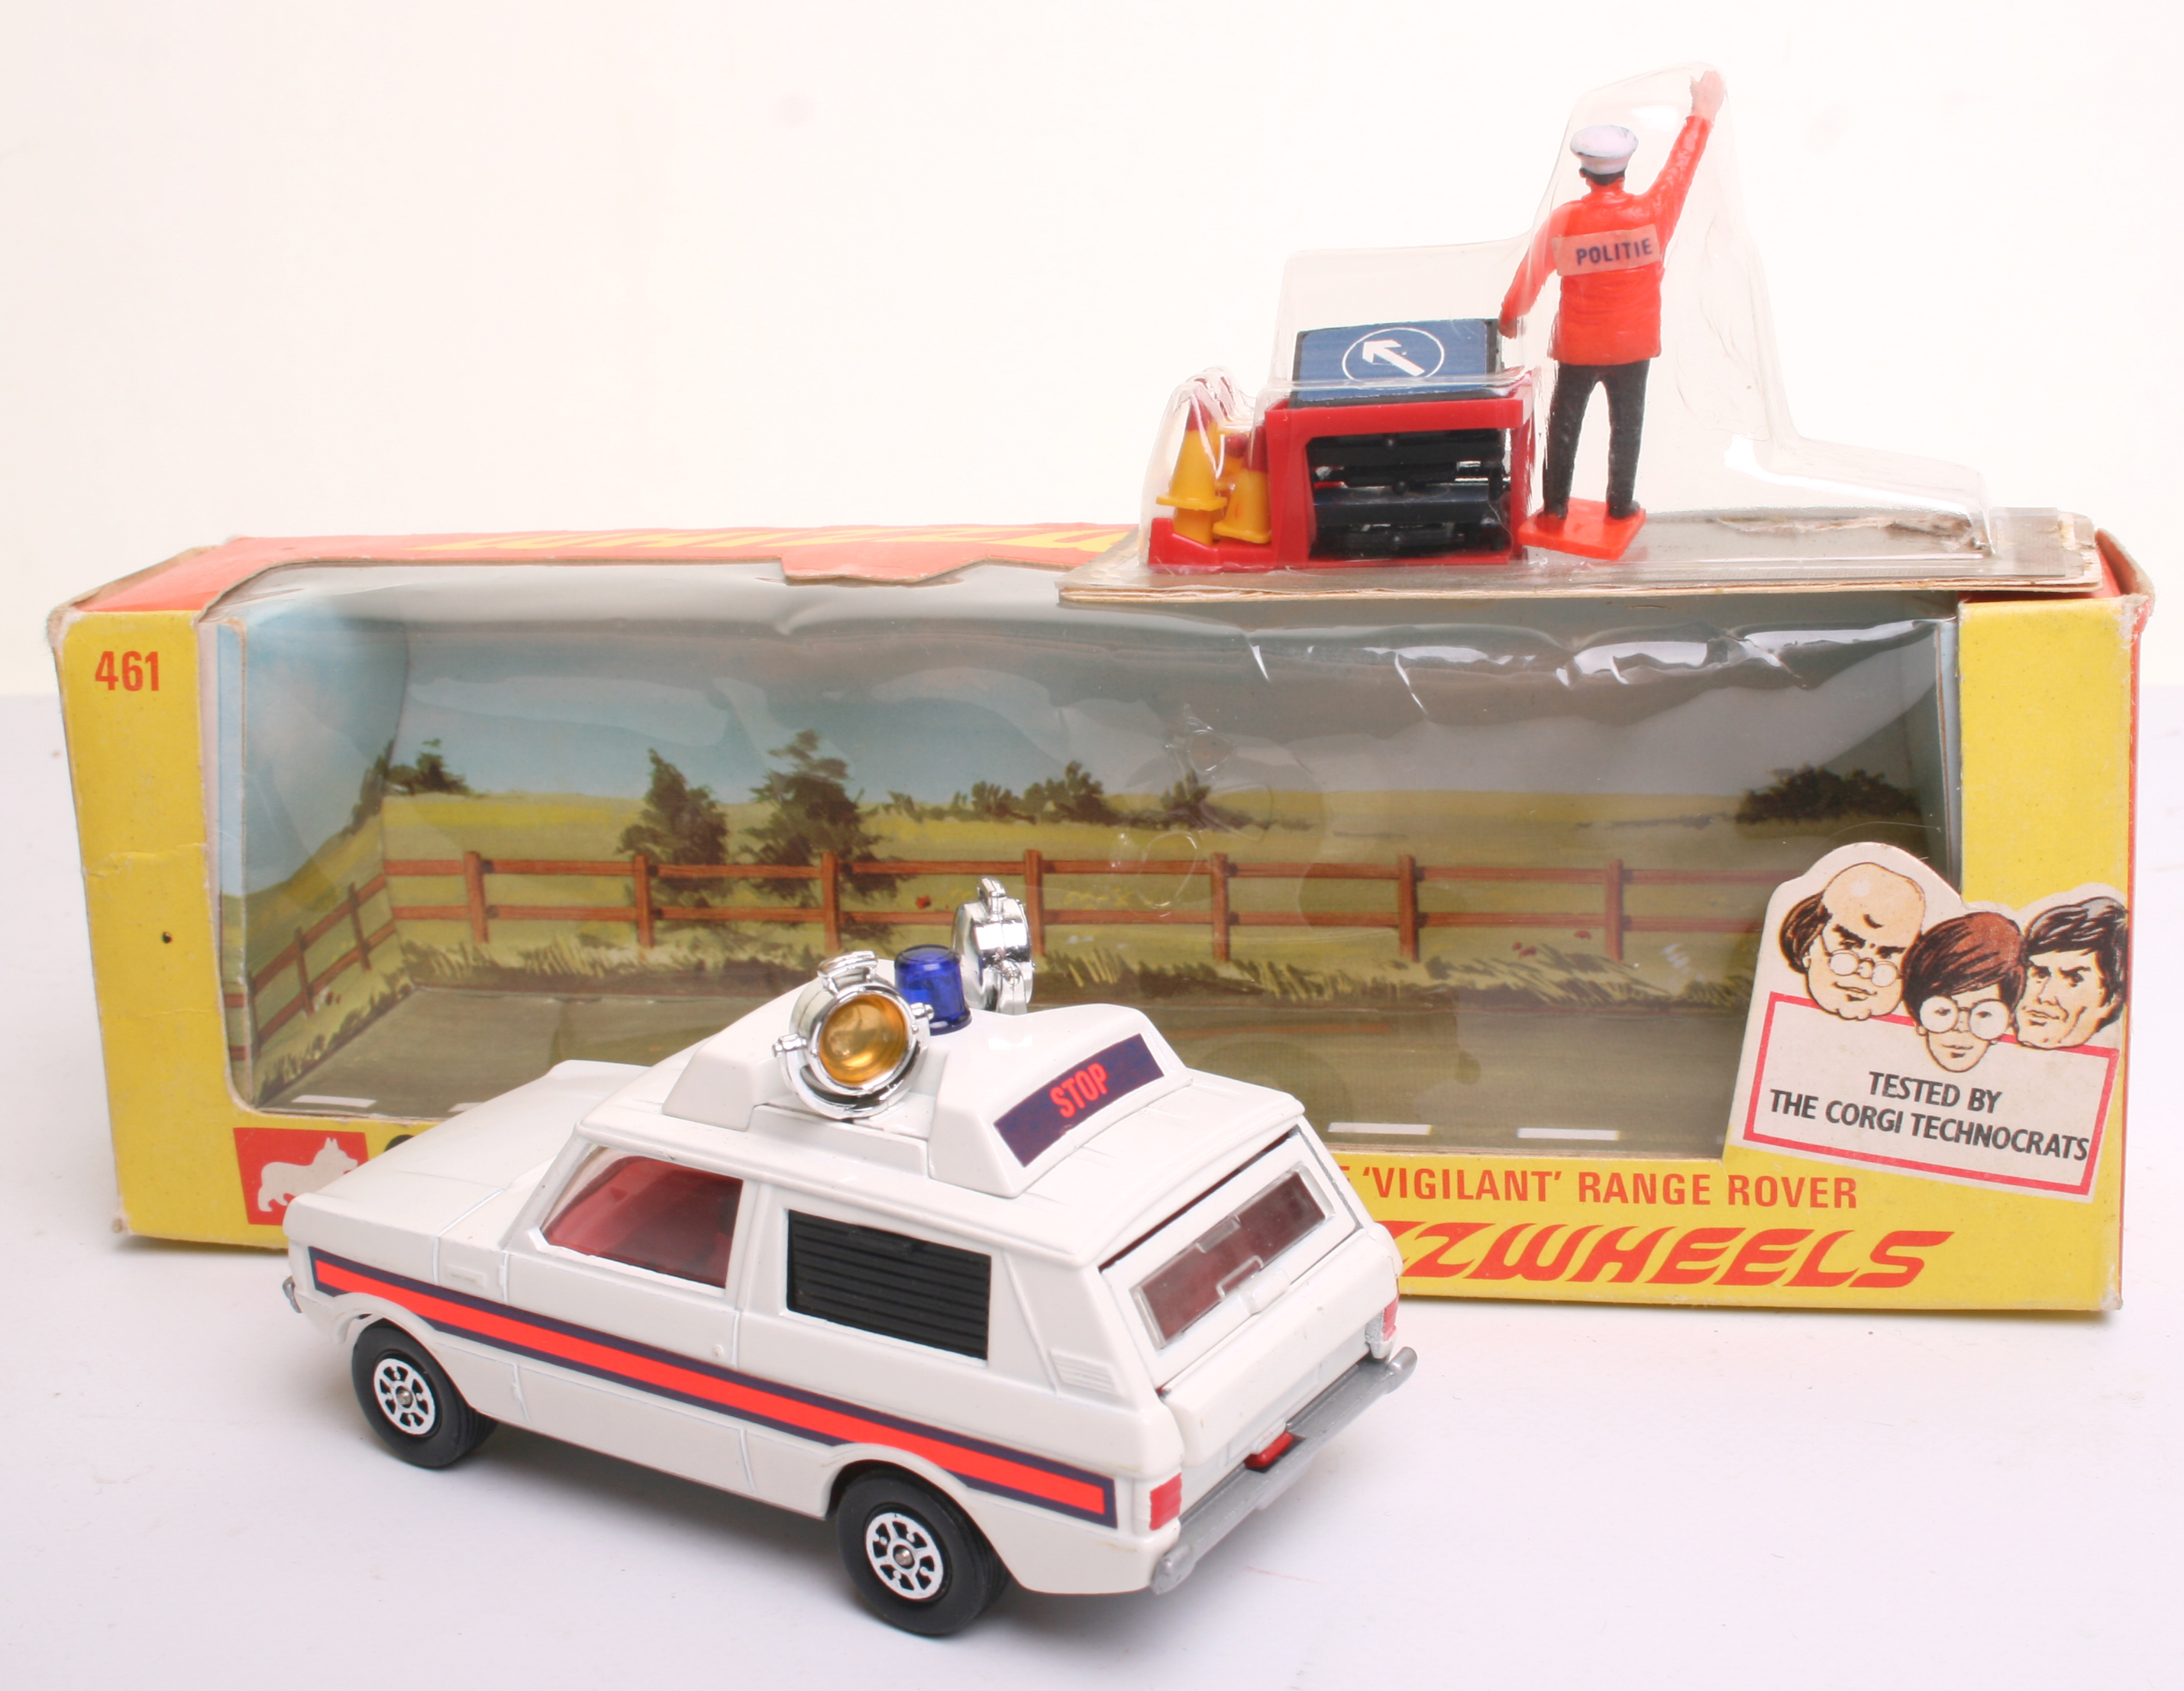 Corgi Toys 461 Police Vigilant Range Rover, Dutch Export Issue, ‘Politie’ decal, whizzwheels, - Image 2 of 3